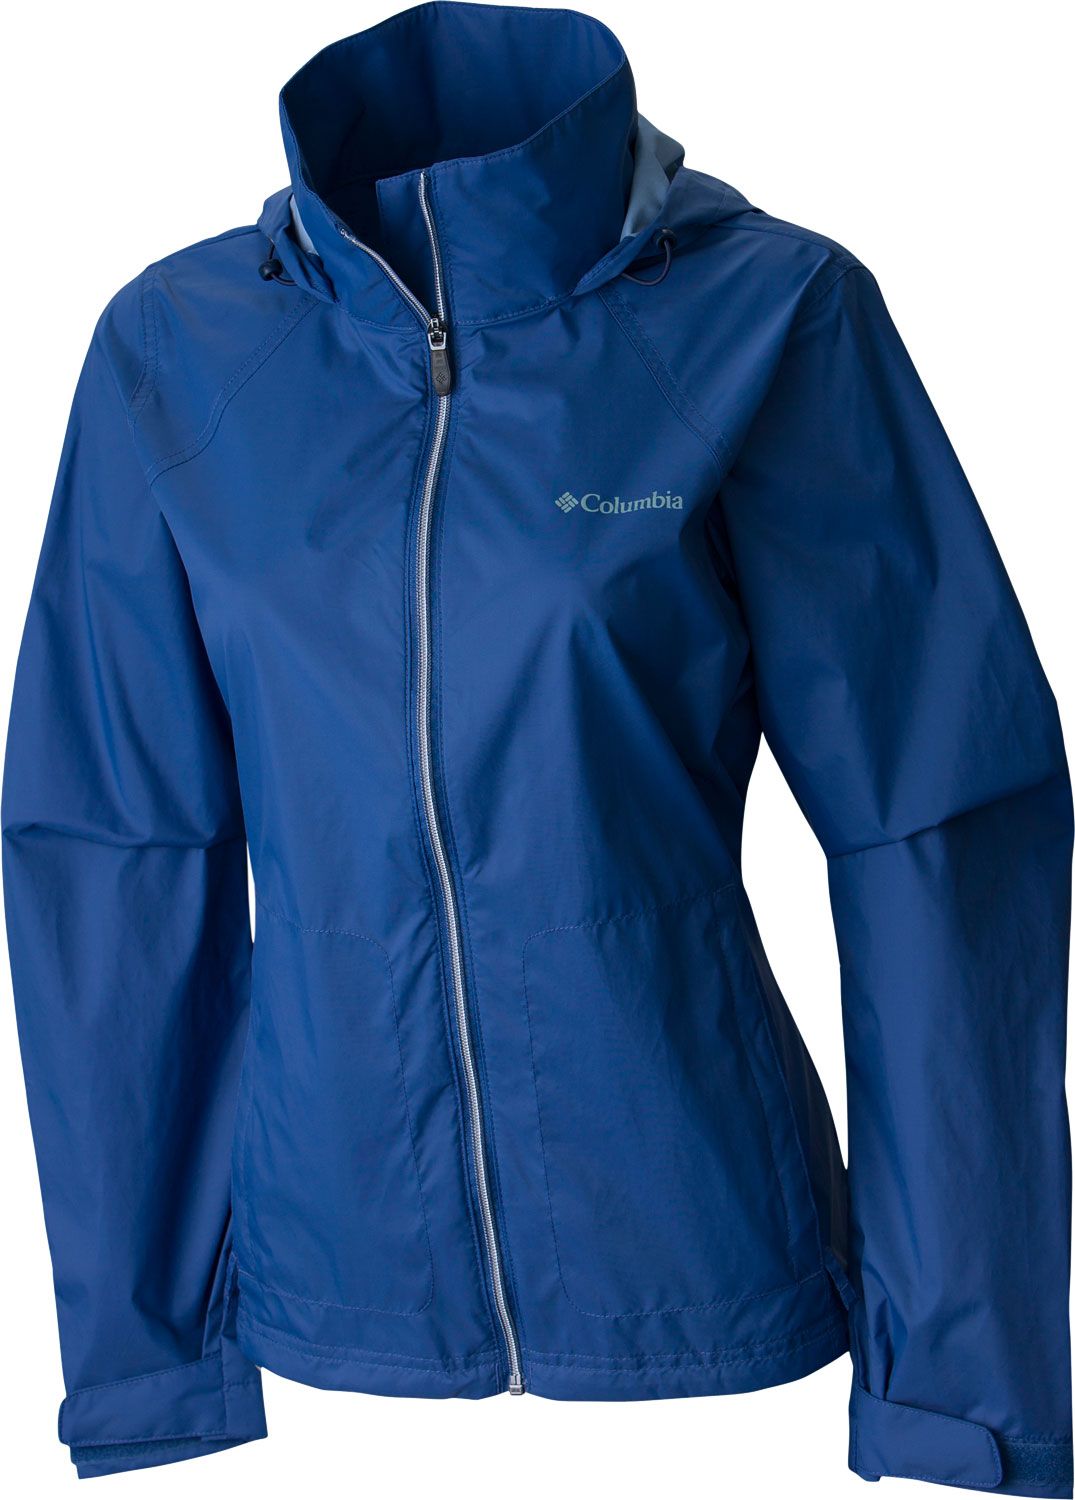 Rain Jackets for Women | DICK&39S Sporting Goods